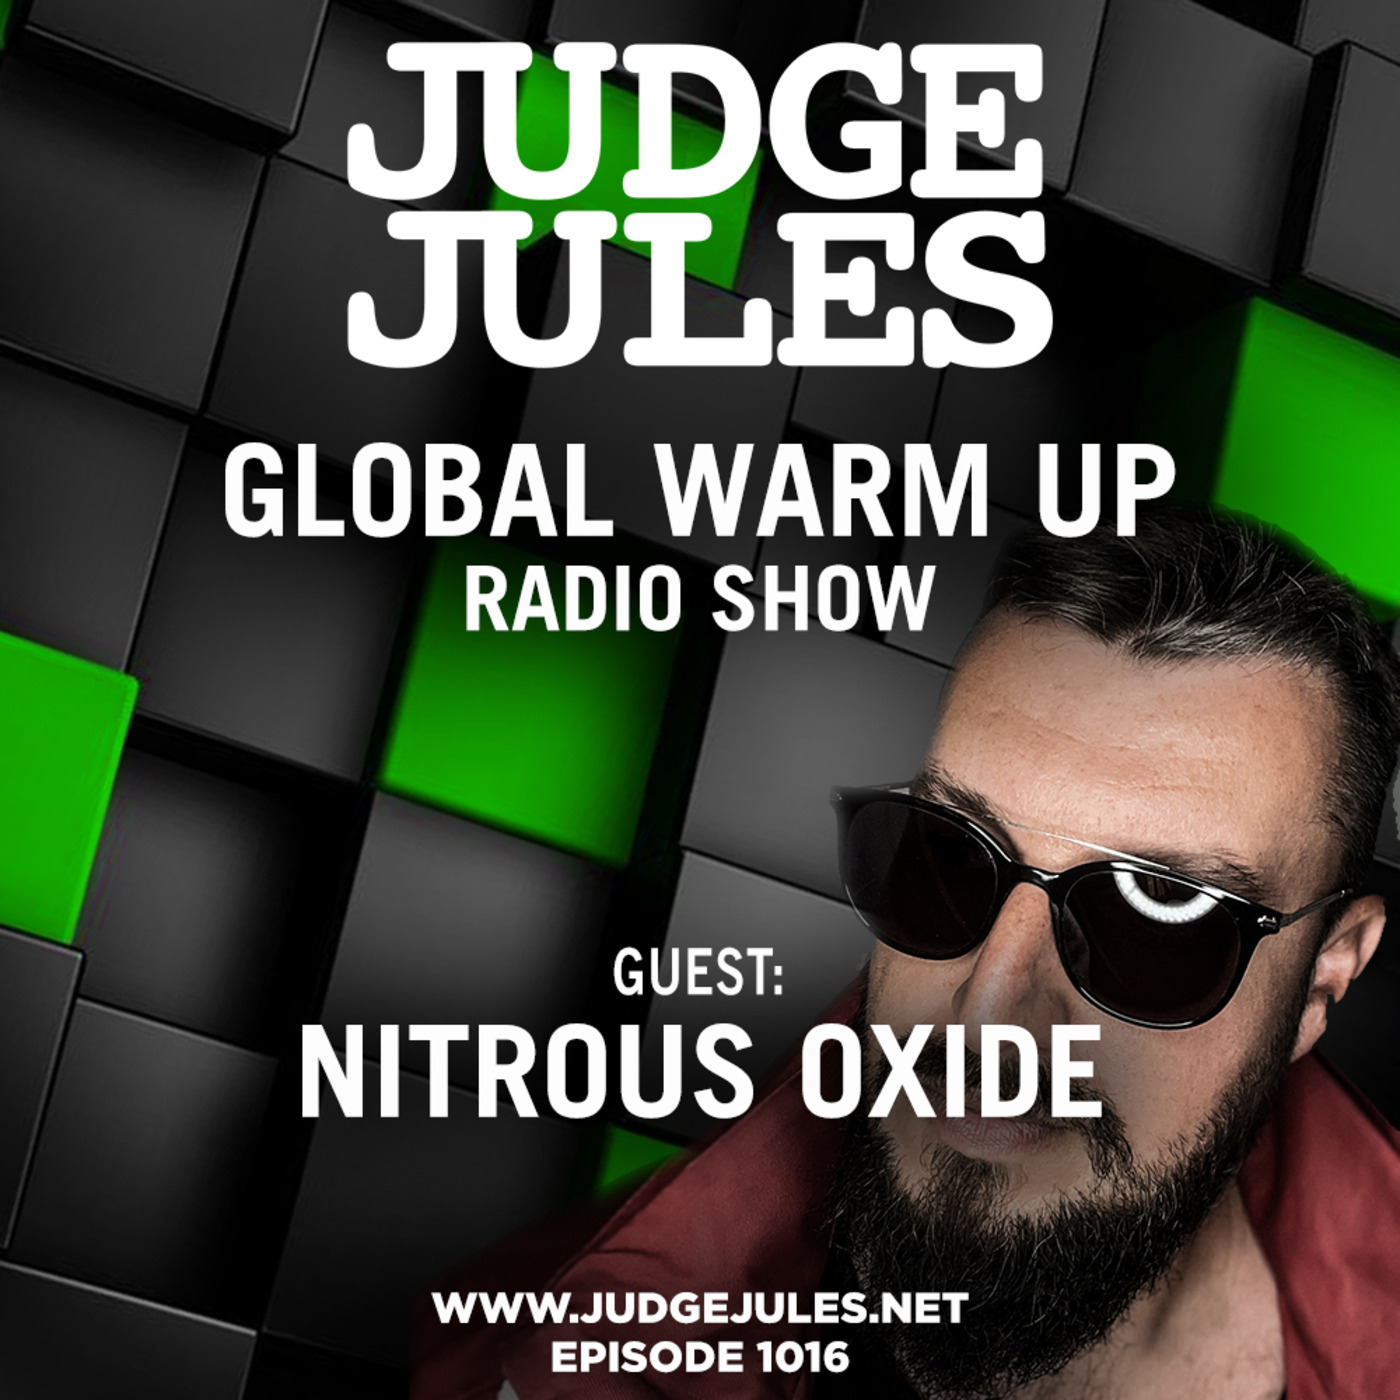 Episode 1016: JUDGE JULES PRESENTS THE GLOBAL WARM UP EPISODE 1016